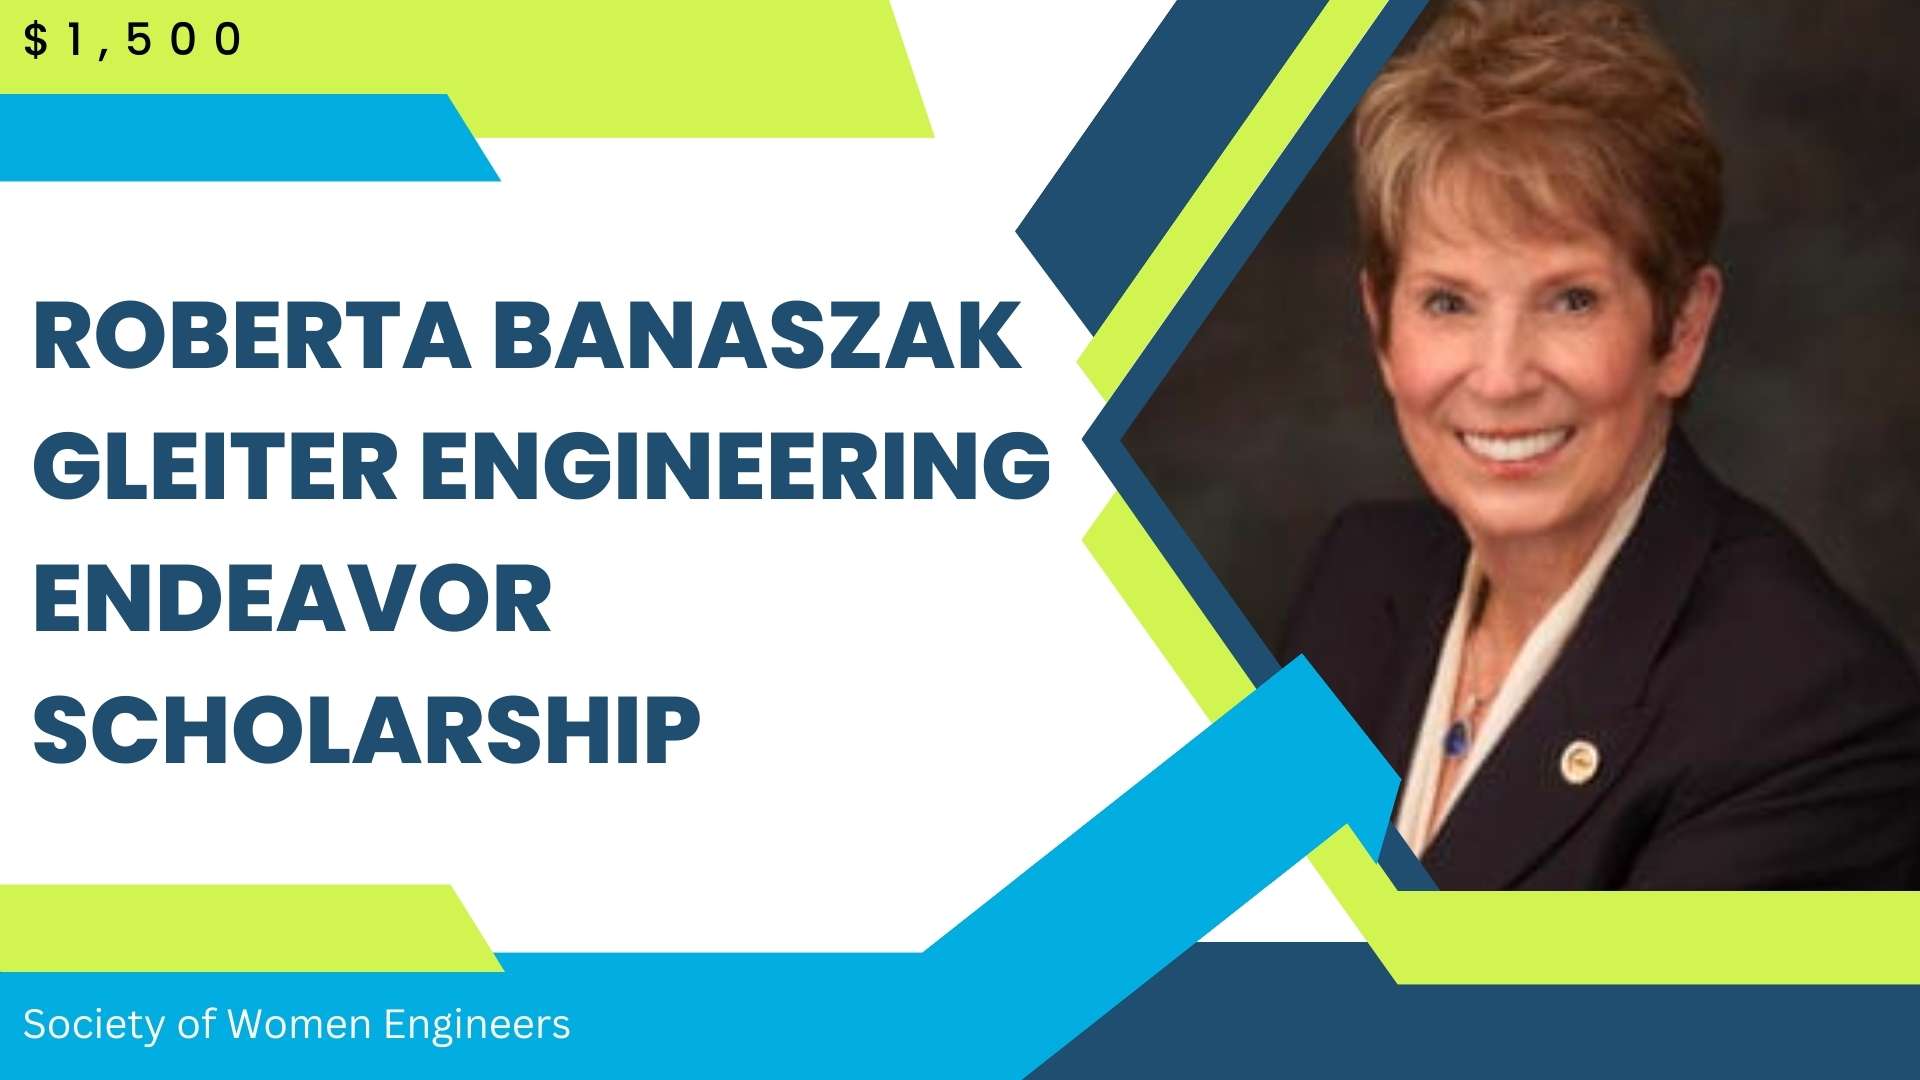 Roberta Banaszak Gleiter Engineering Endeavor Scholarship